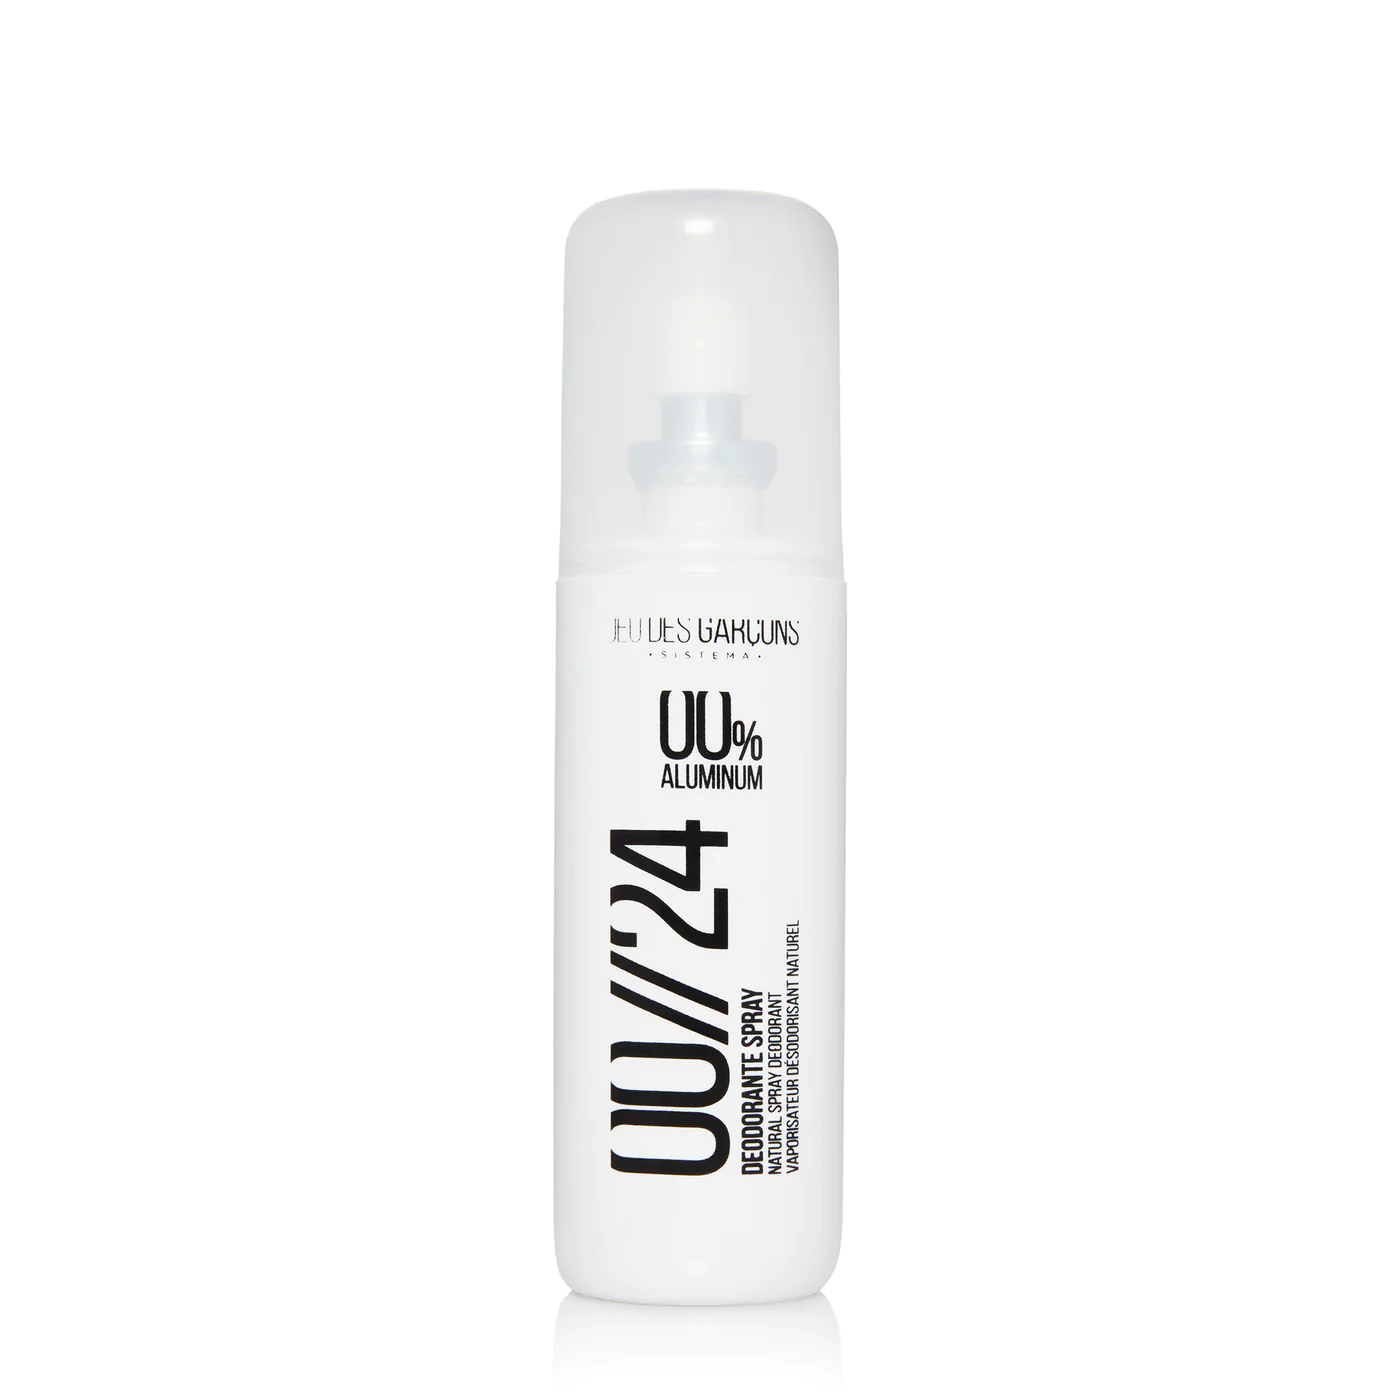 Deodorante Spray Senza Alluminio 00/24 75ml - Jeu des Garçons